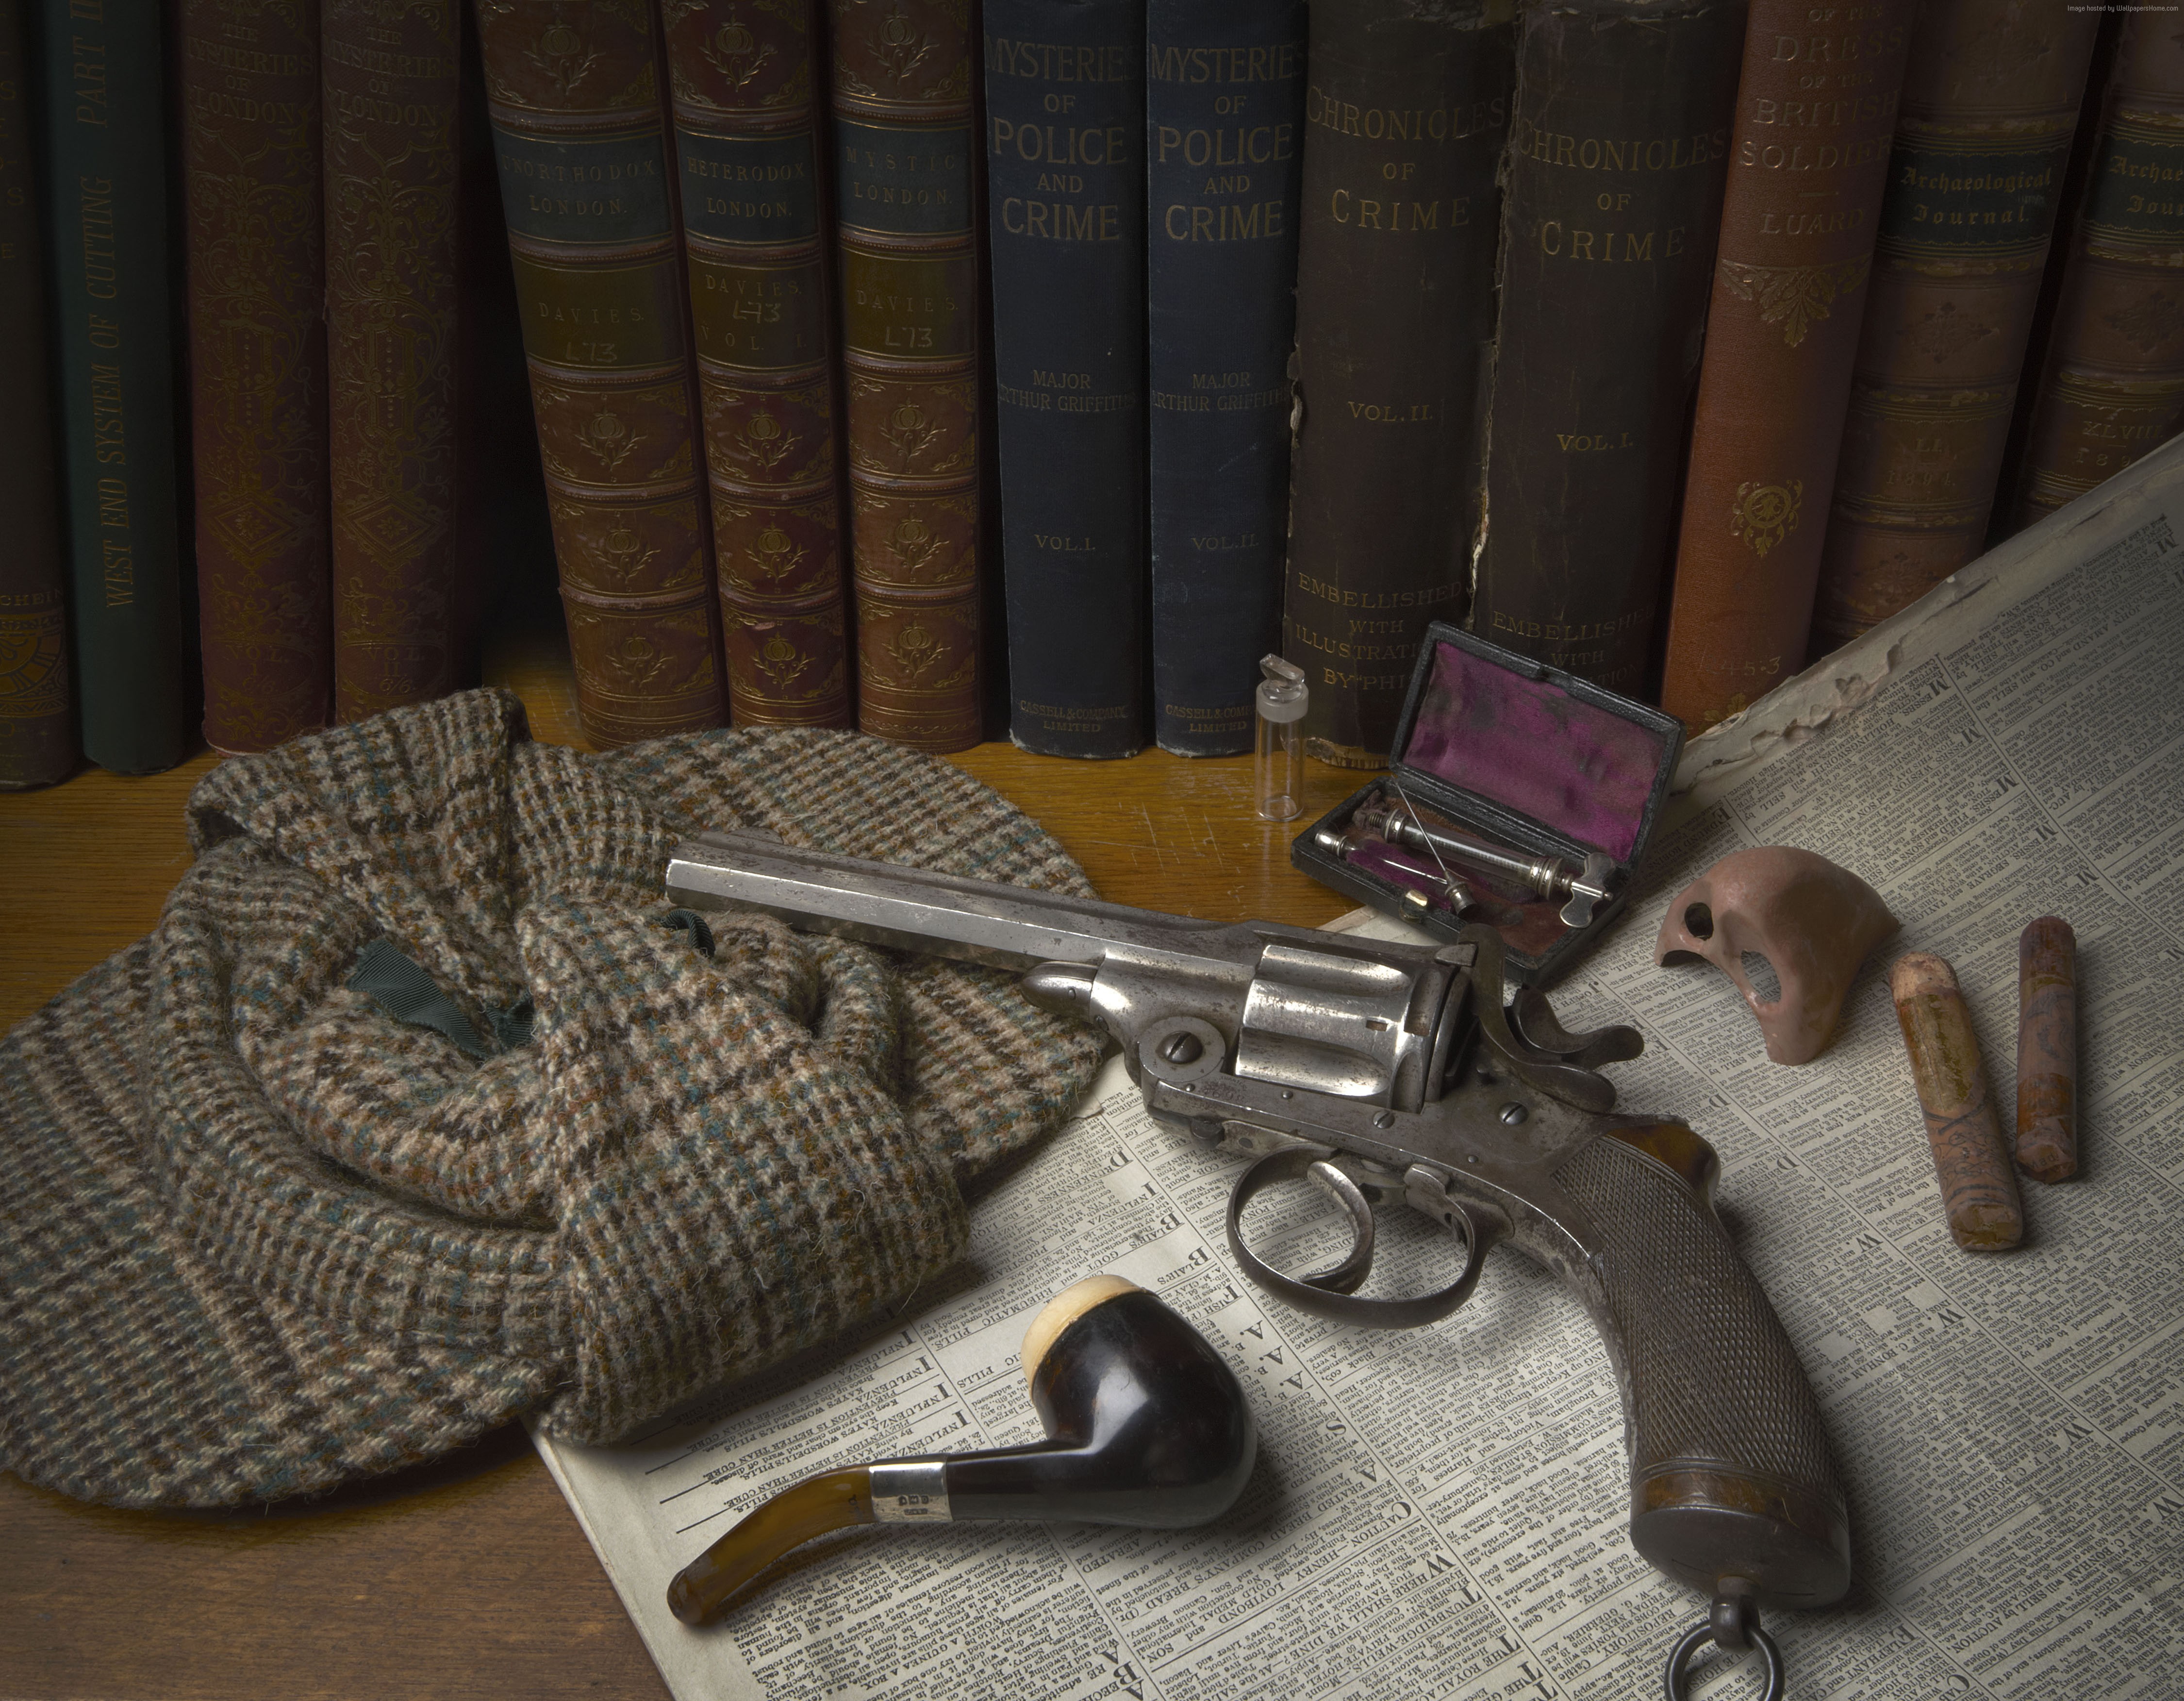 classic pistol, bullets, gunpowder, antique revolver, books